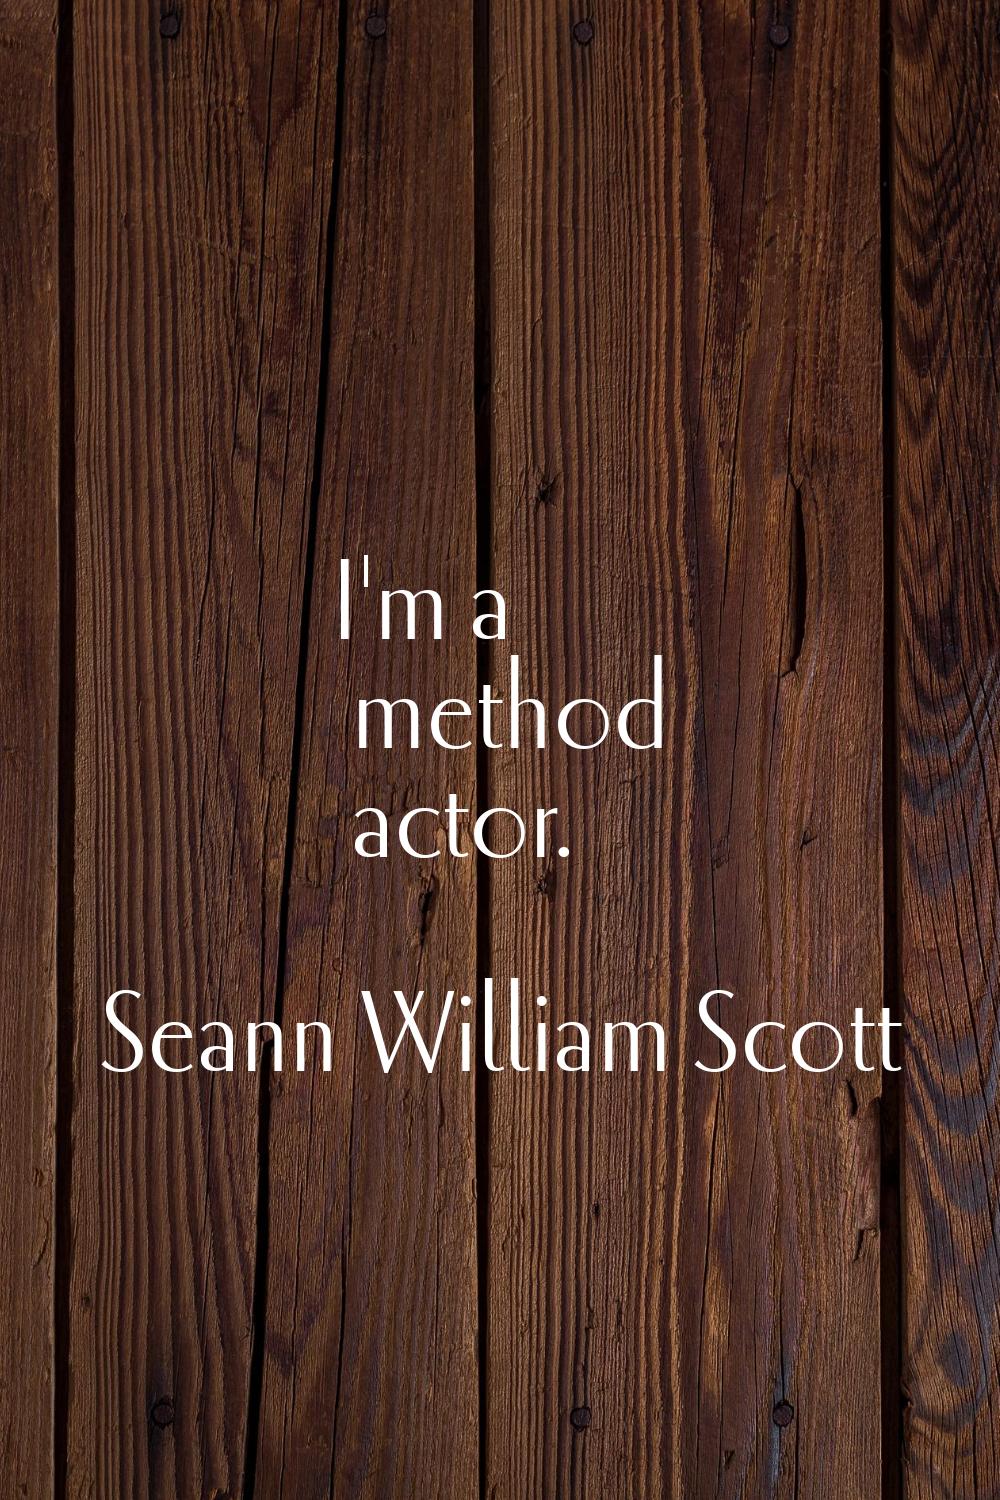 I'm a method actor.